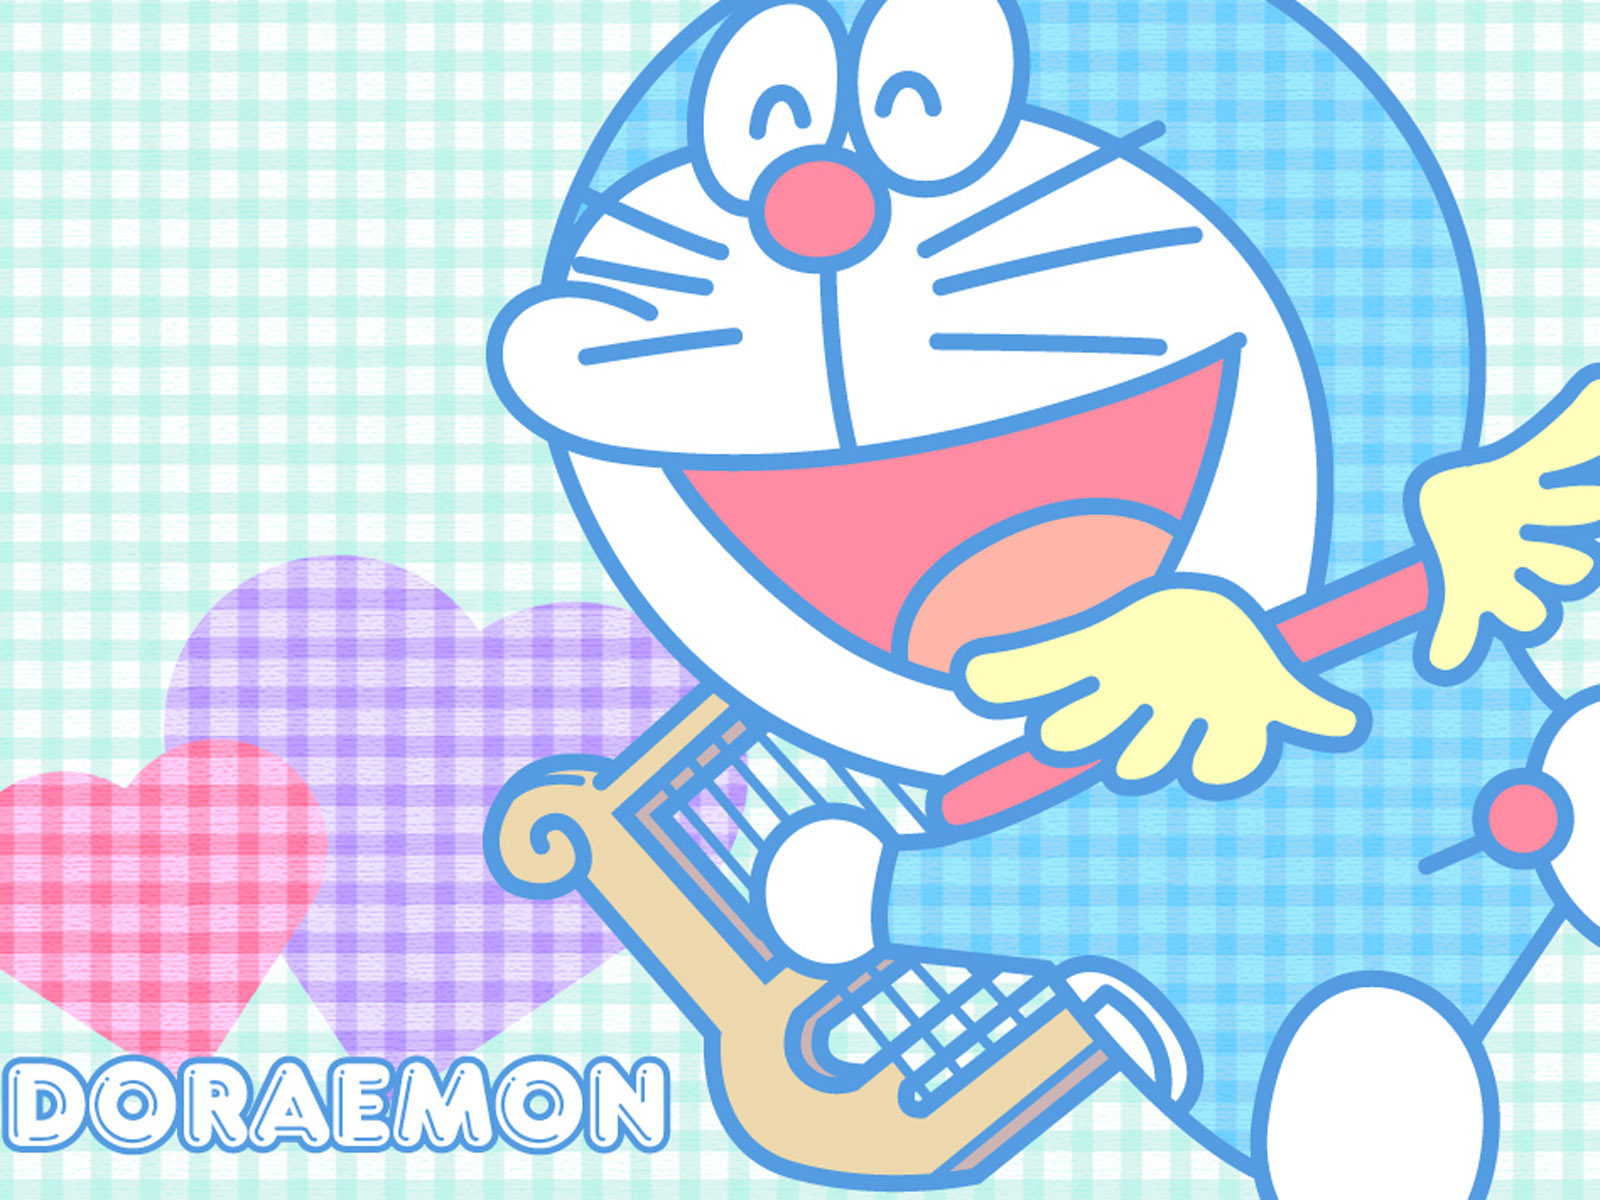 Doraemon Wallpaper For Mobile iPhone Android HD Jpg